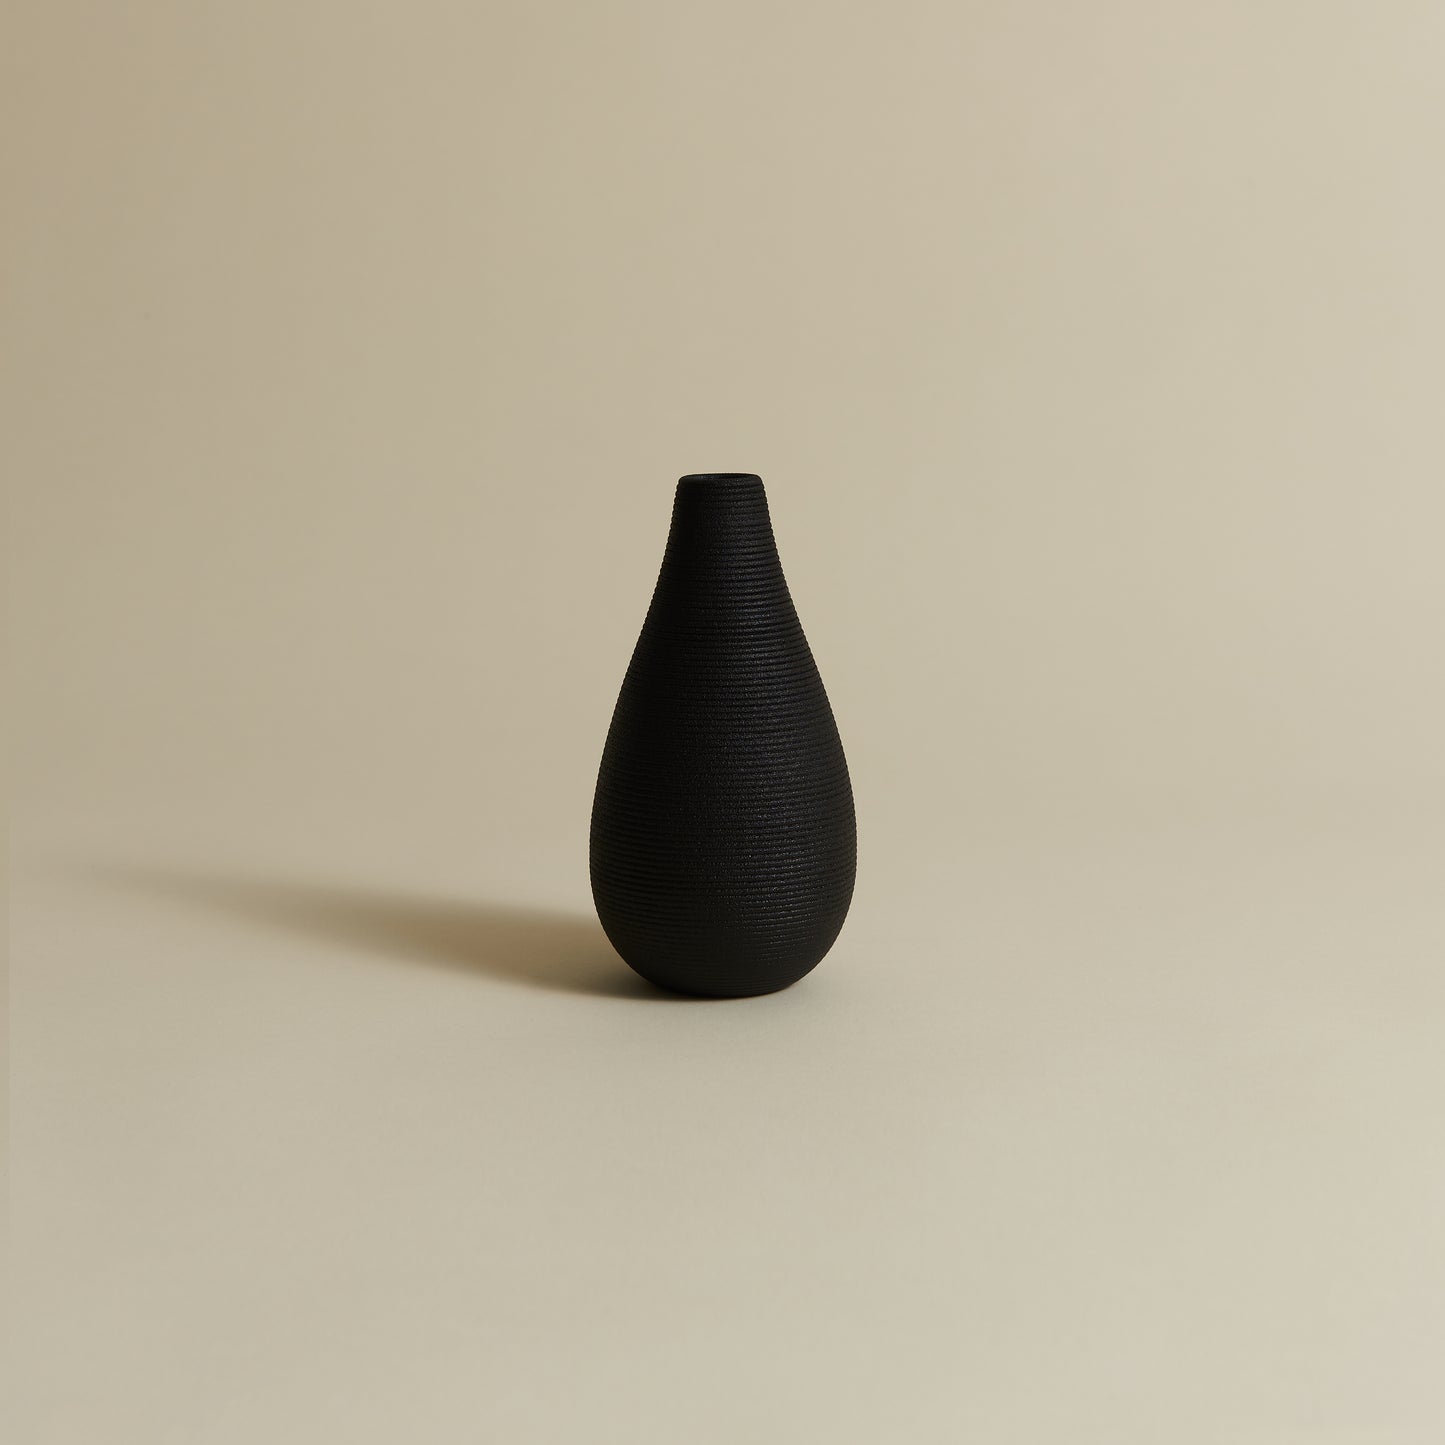 Pear Vase